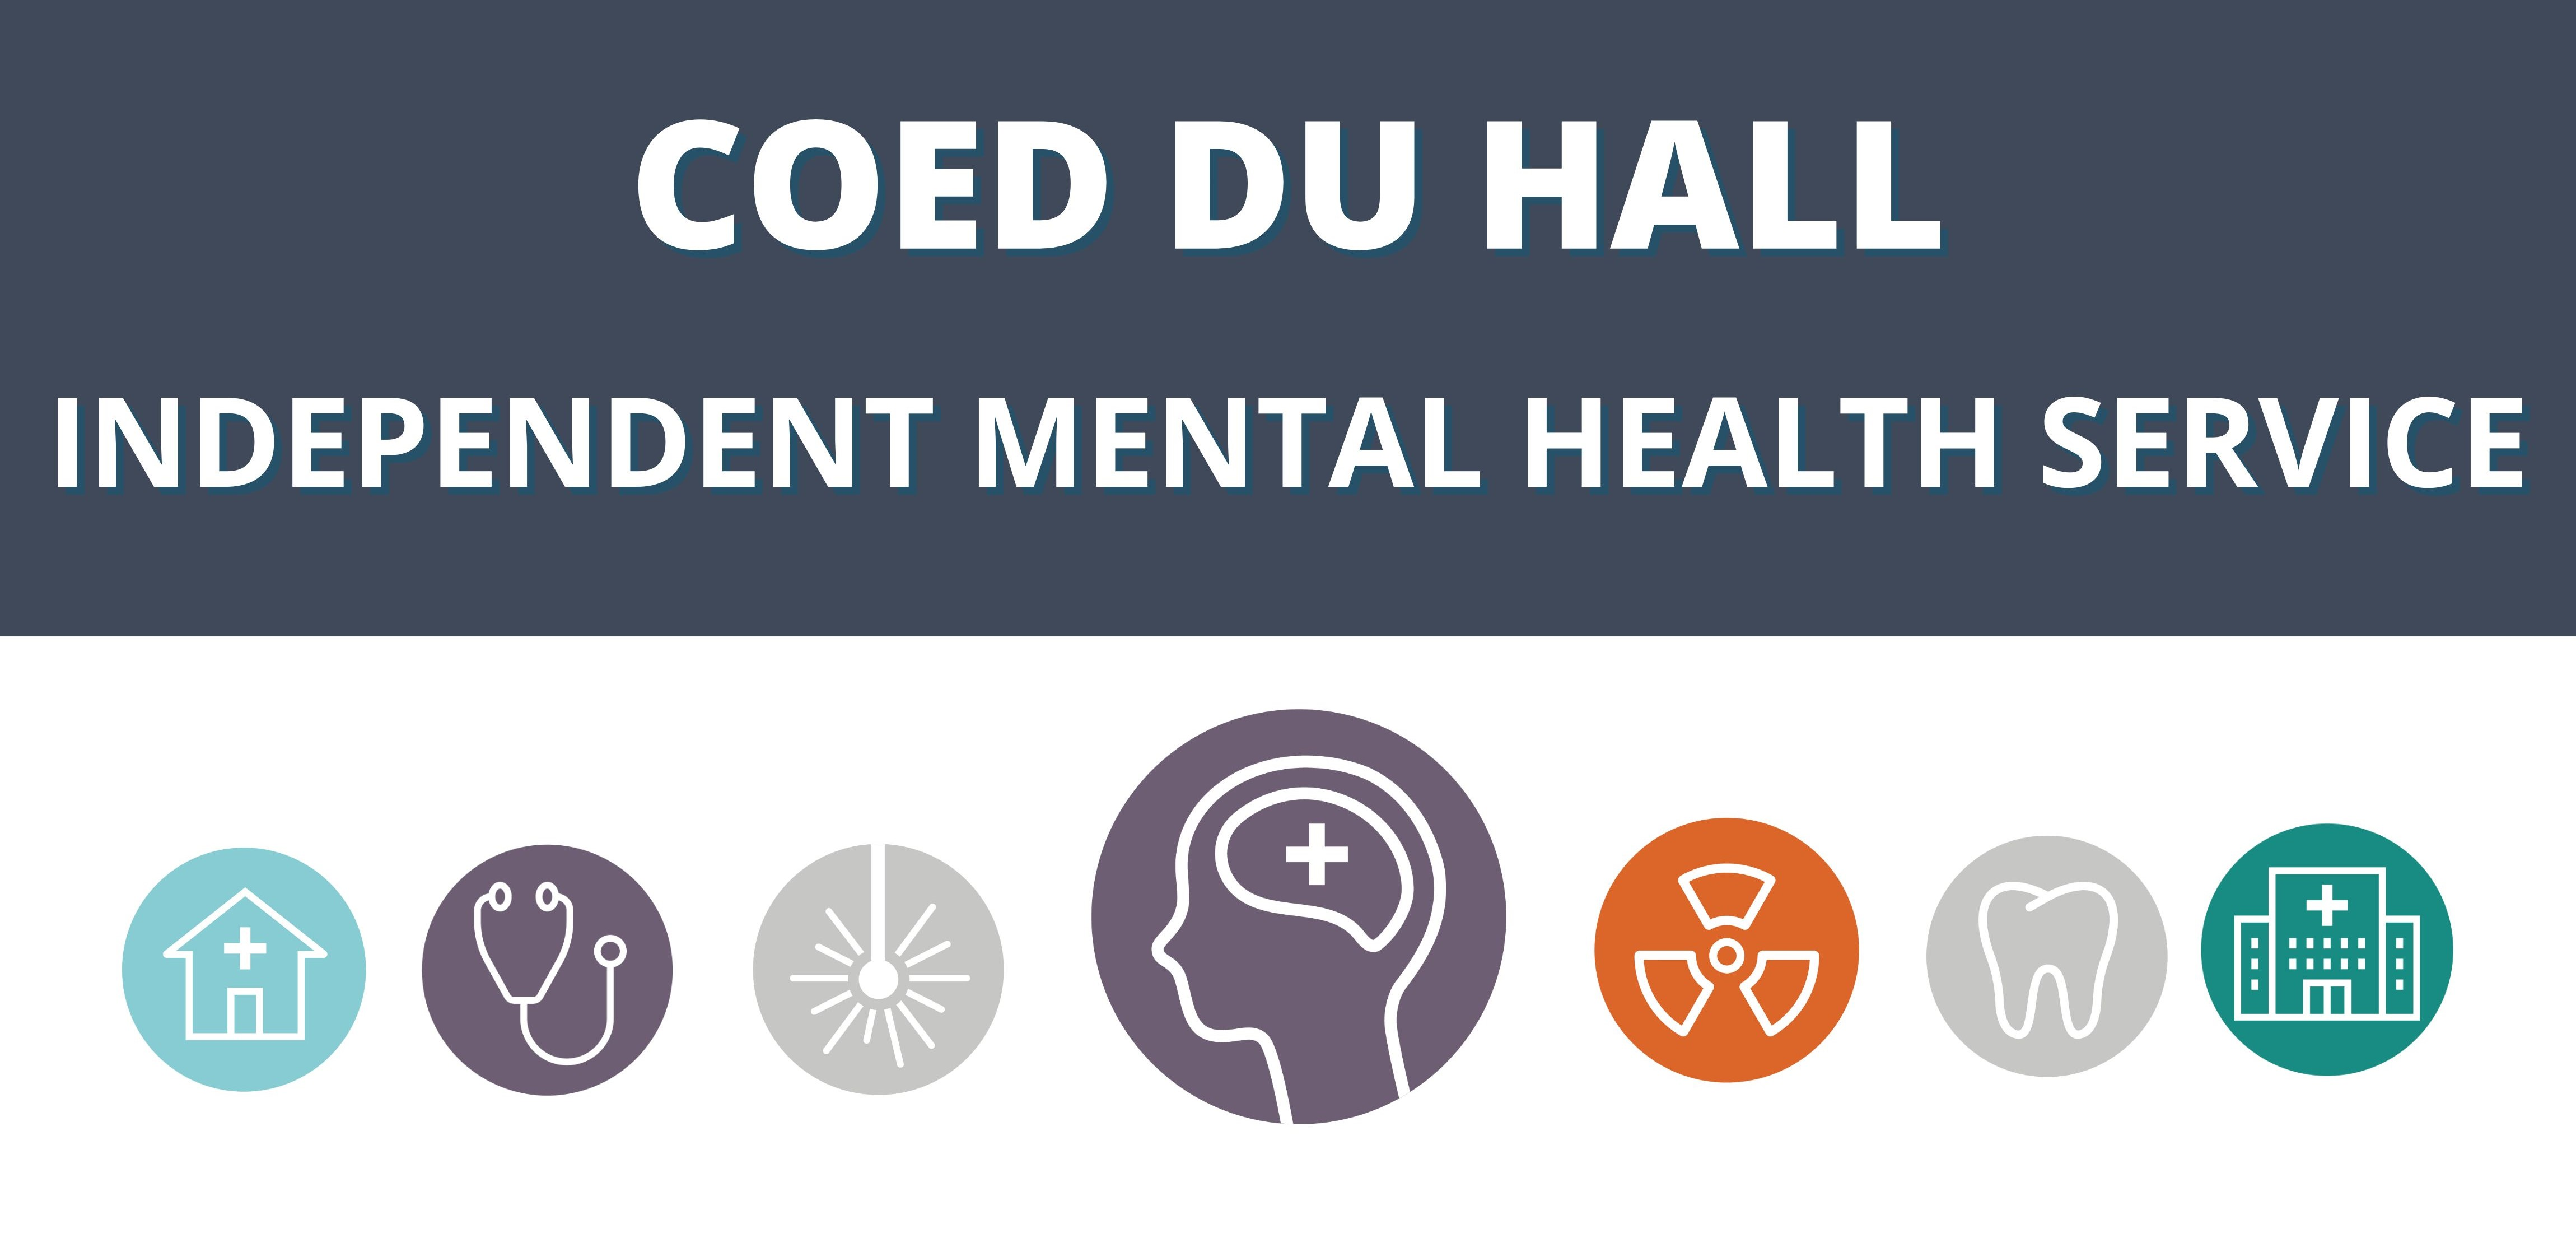 Coed Du Hall - Independent Mental Health Service